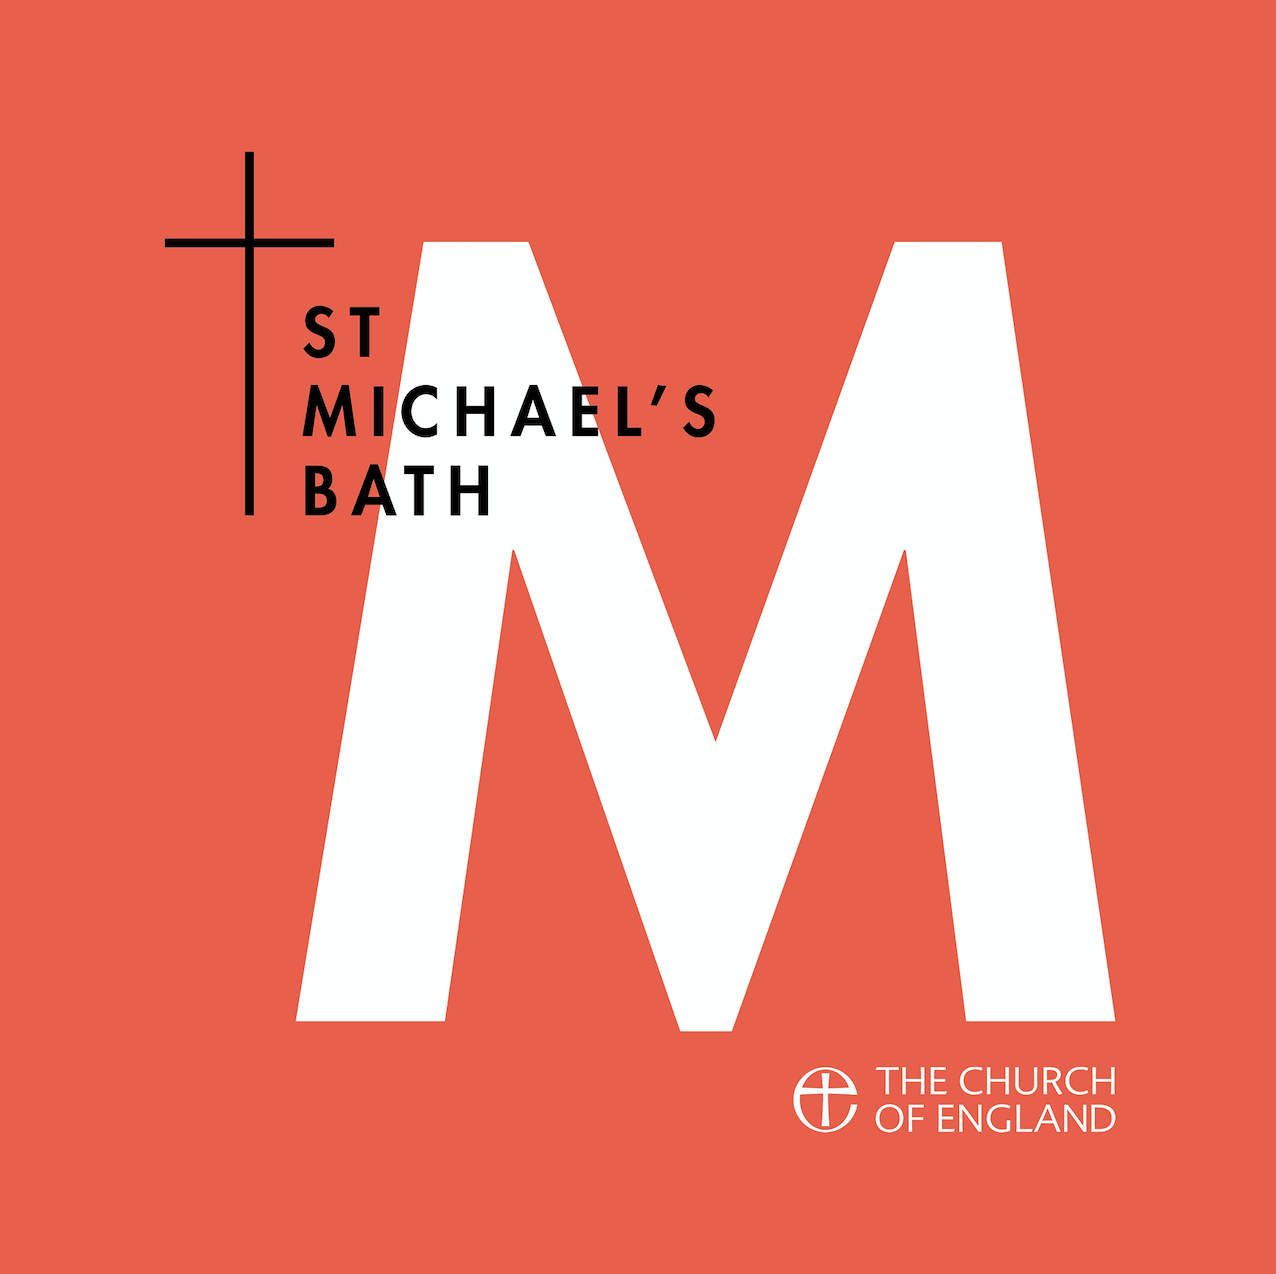 St Michael's Bath